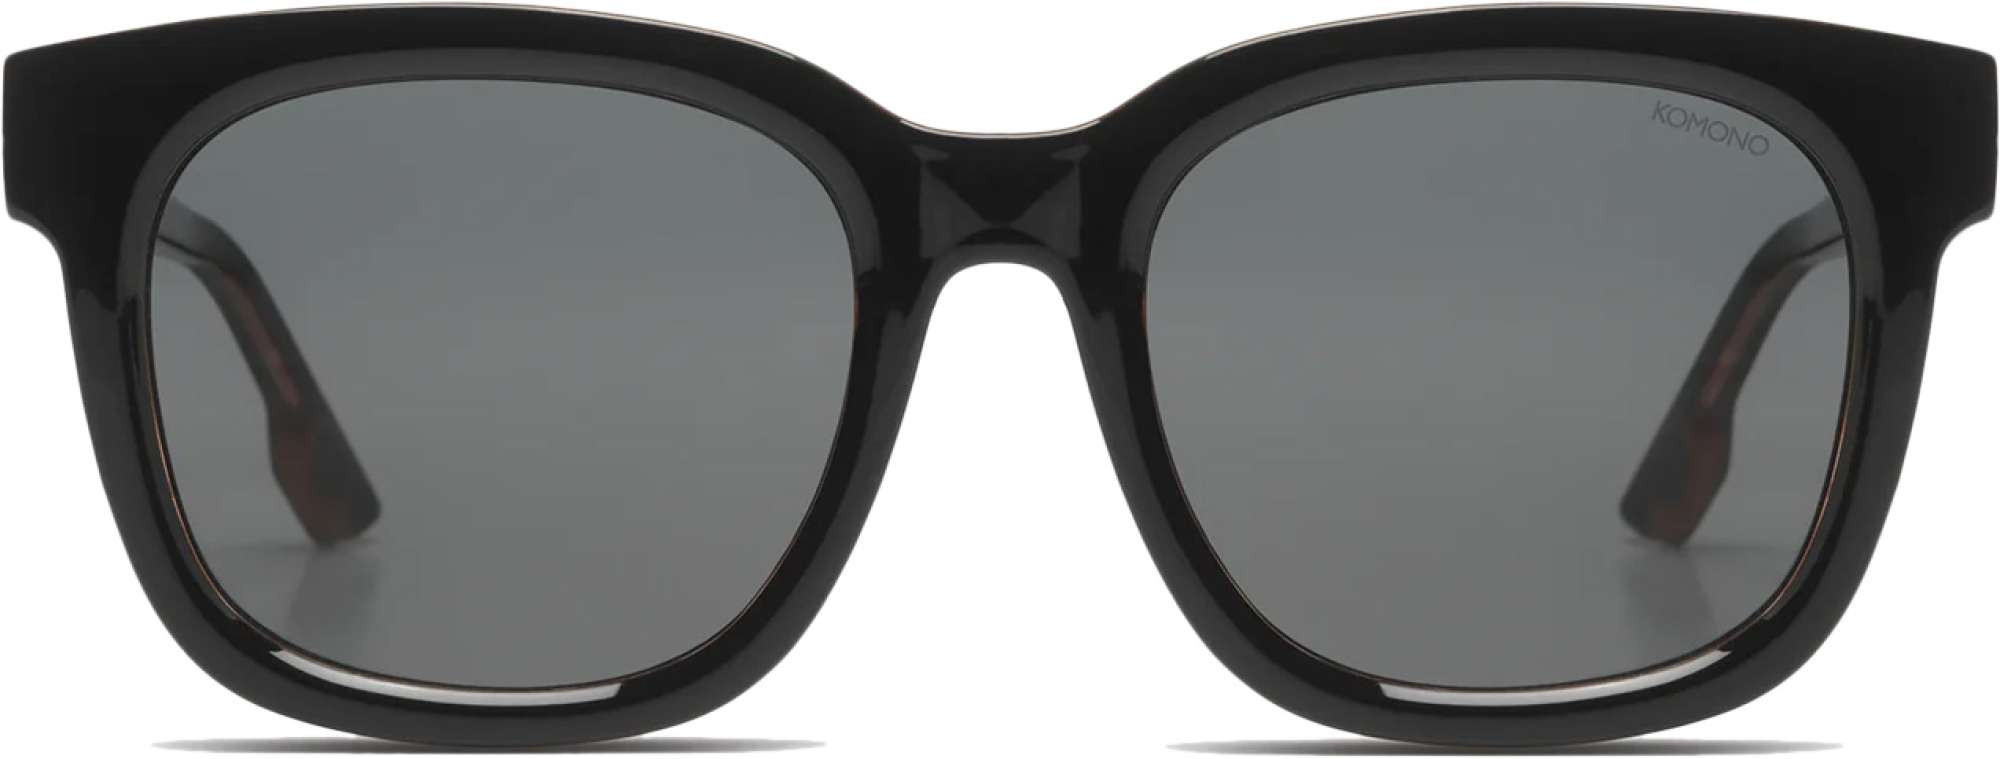 Afbeelding van Komono Sienna black tortoise sunglasses